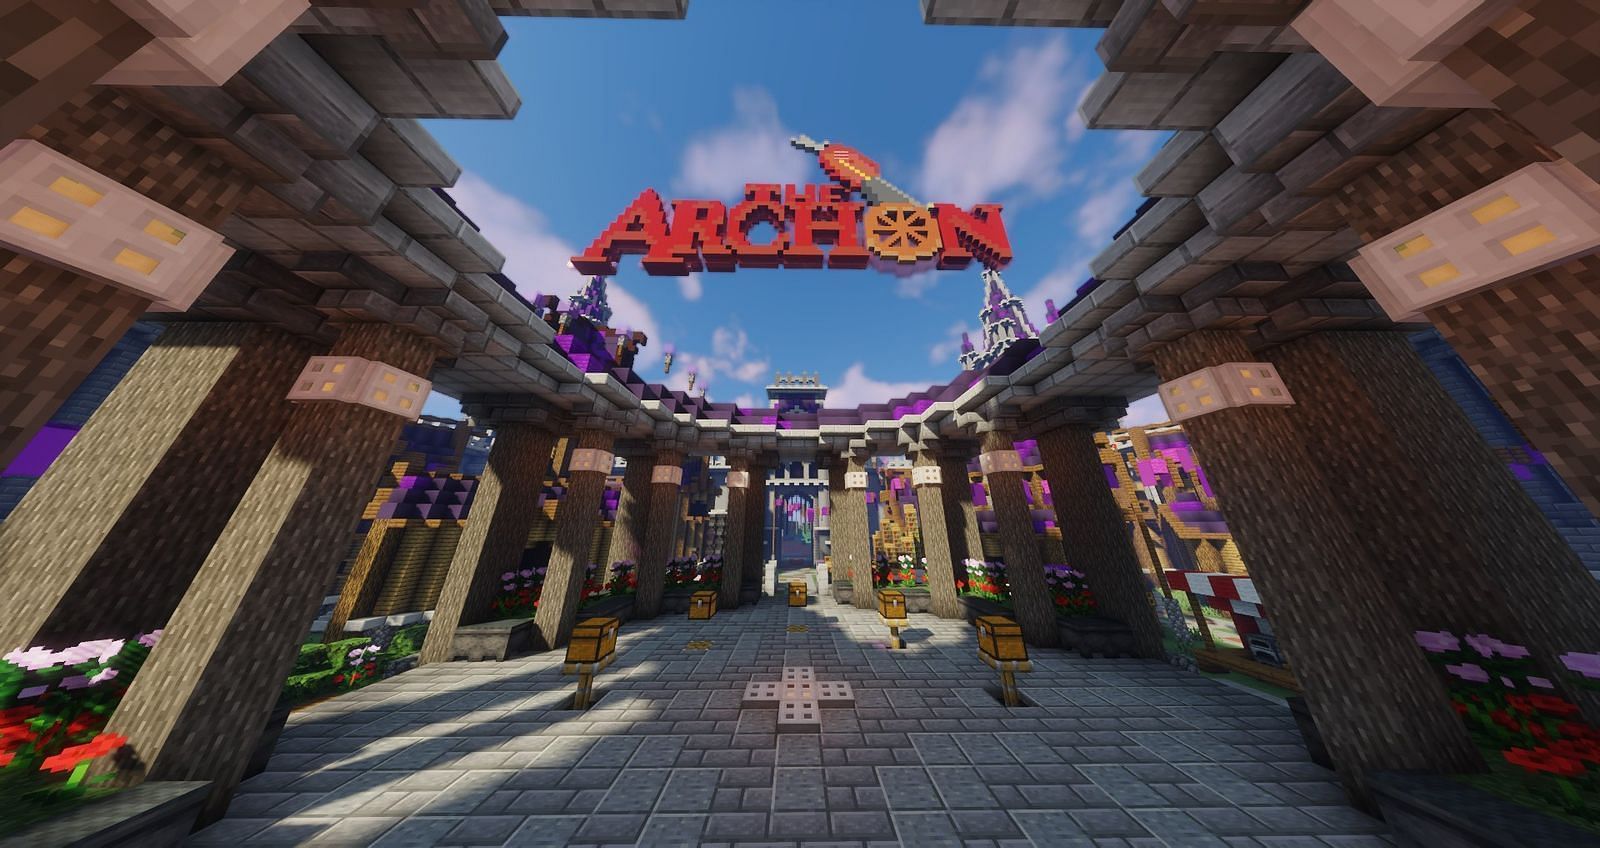 The Archon Minecraft Server (Image via thearchon.net)